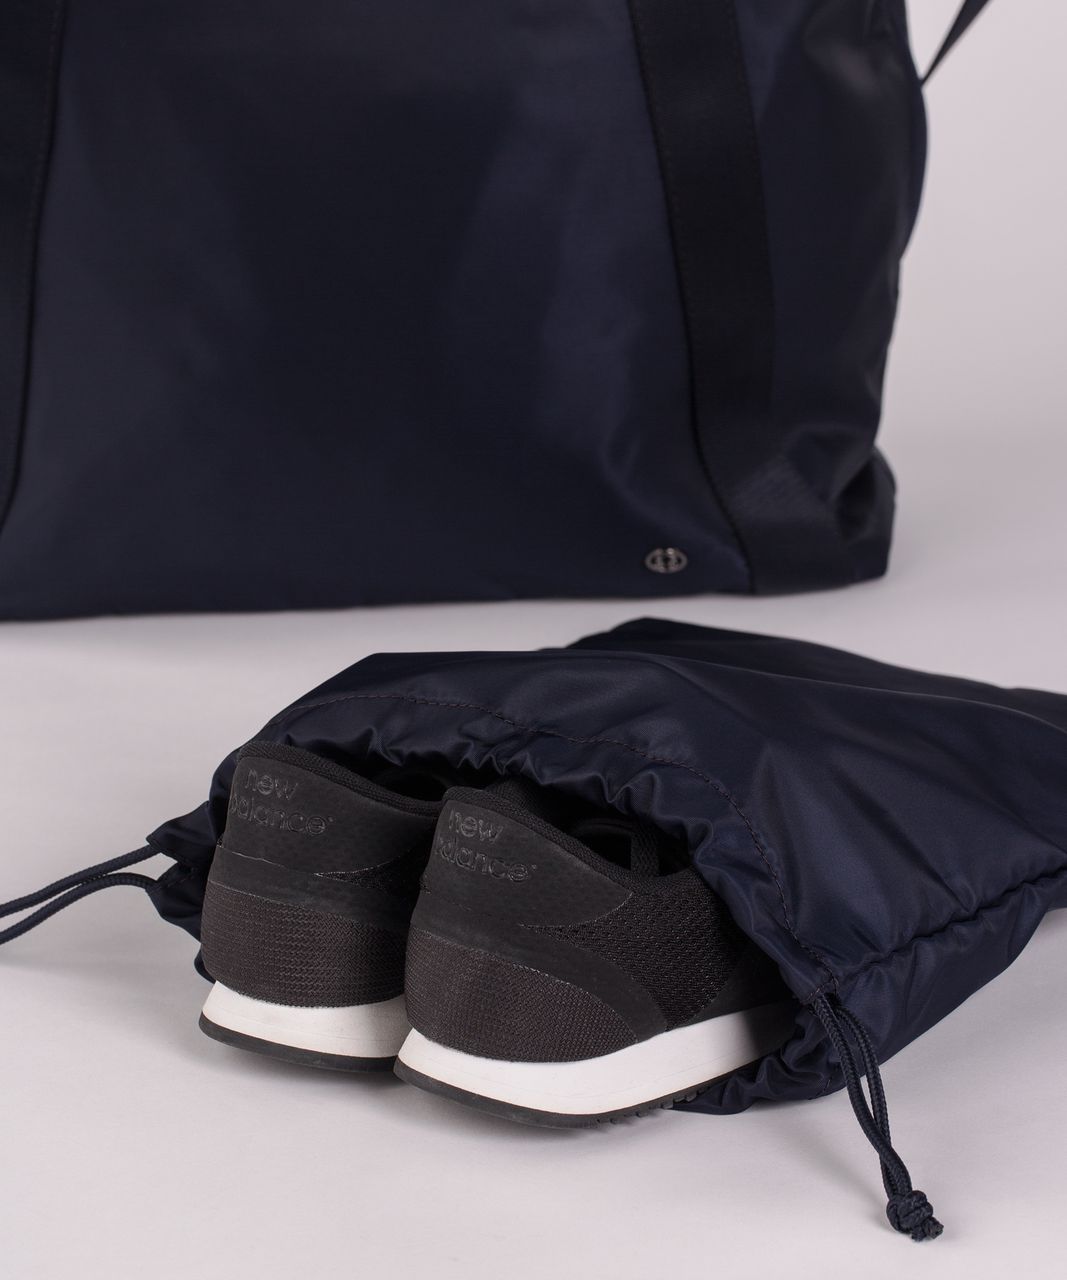 Lululemon Carry The Day Bag (Heatproof Pocket) - Midnight Navy